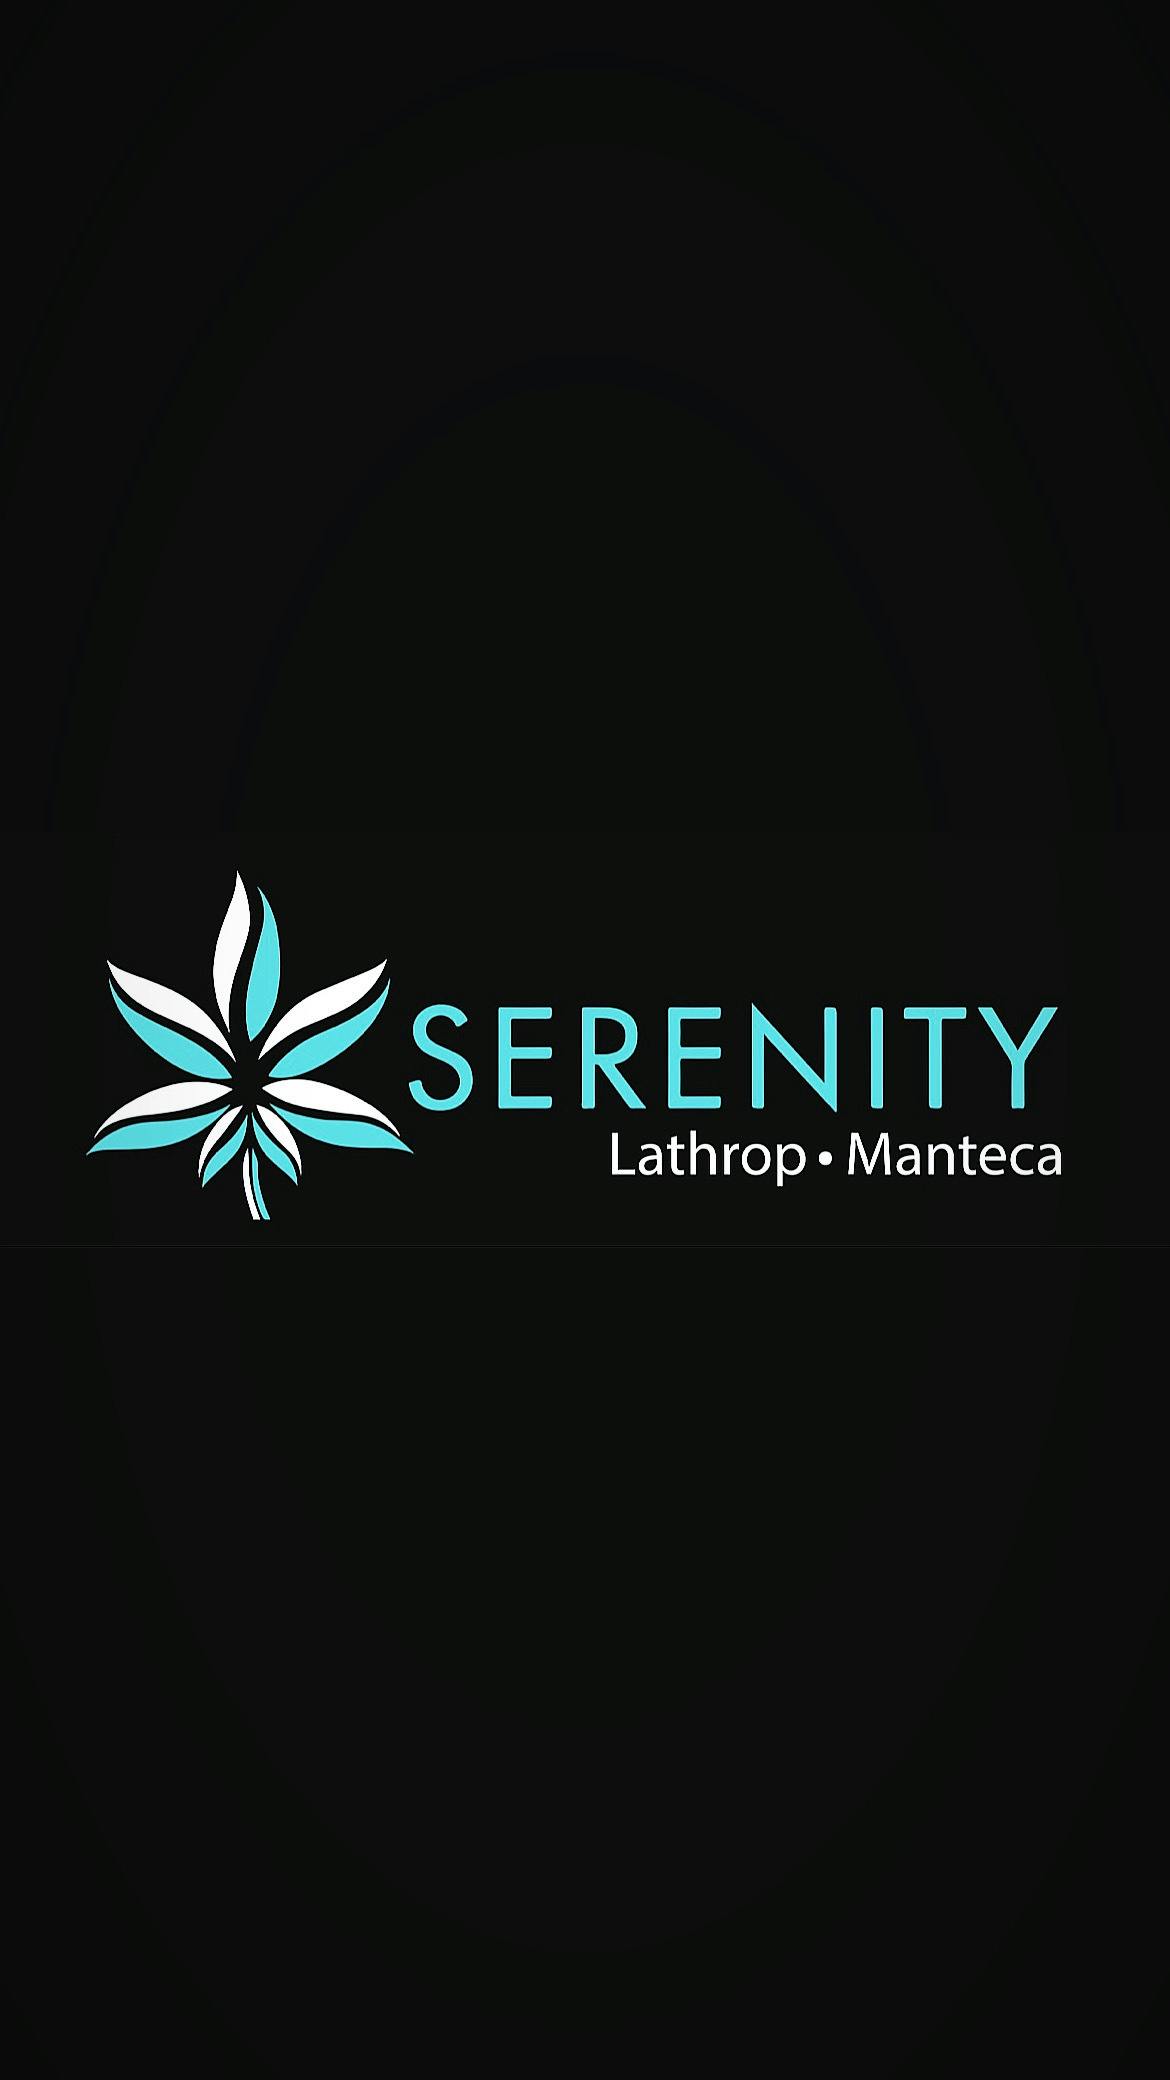 Serenity of Lathrop - Manteca logo